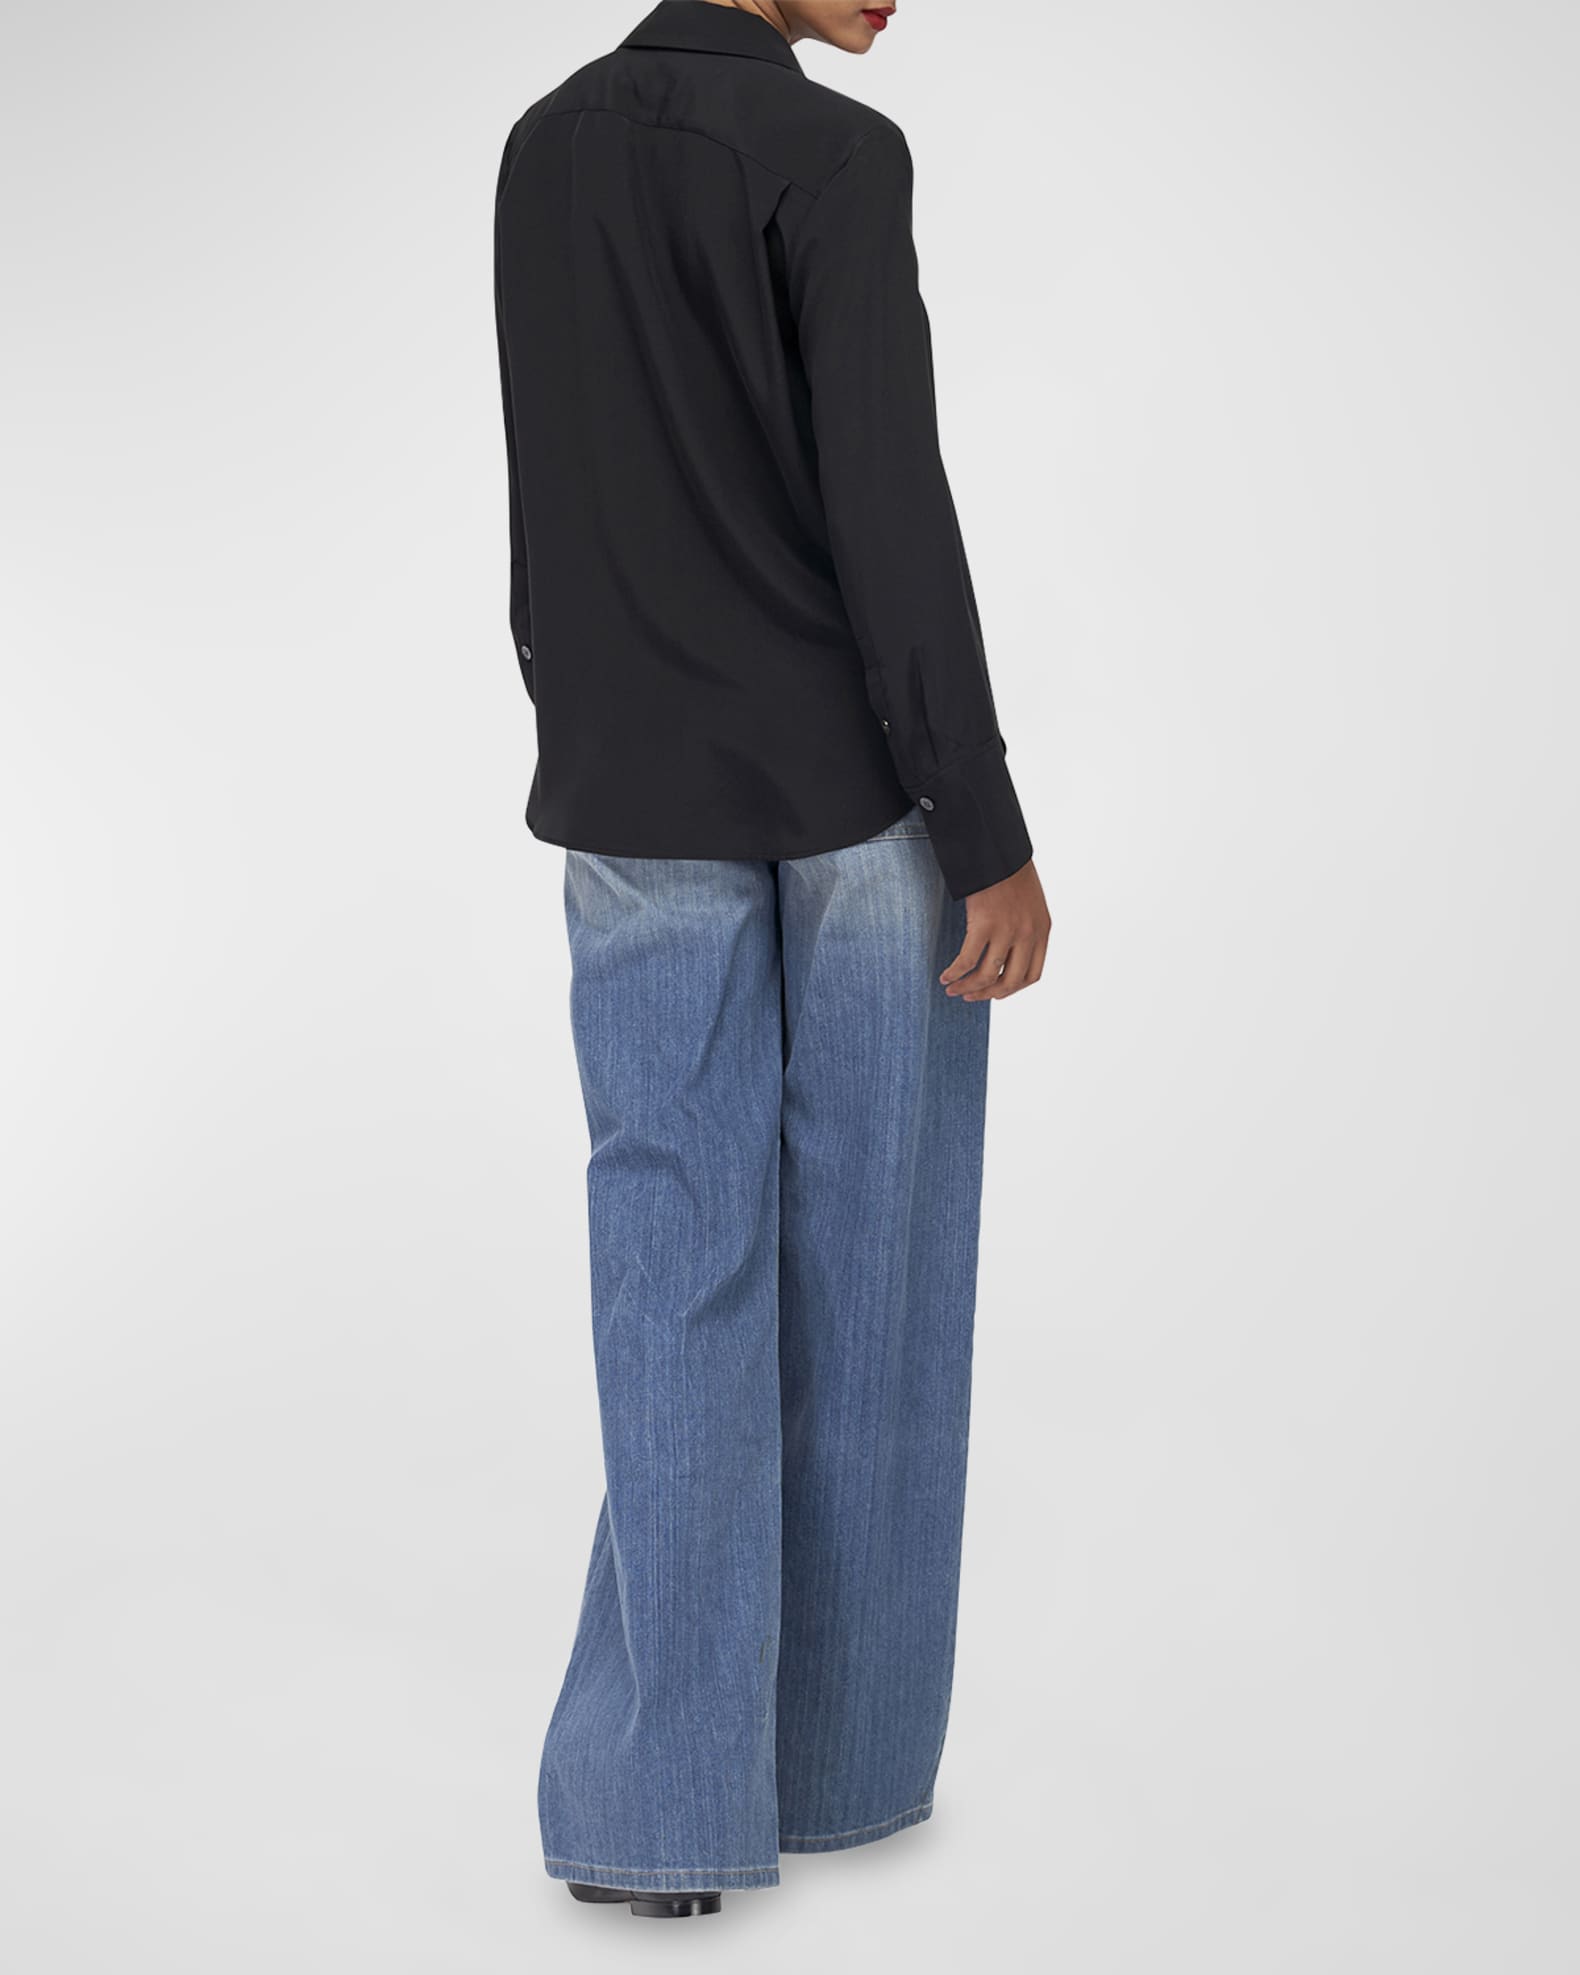 Equipment Essential Long-Sleeve Silk Shirt | Neiman Marcus